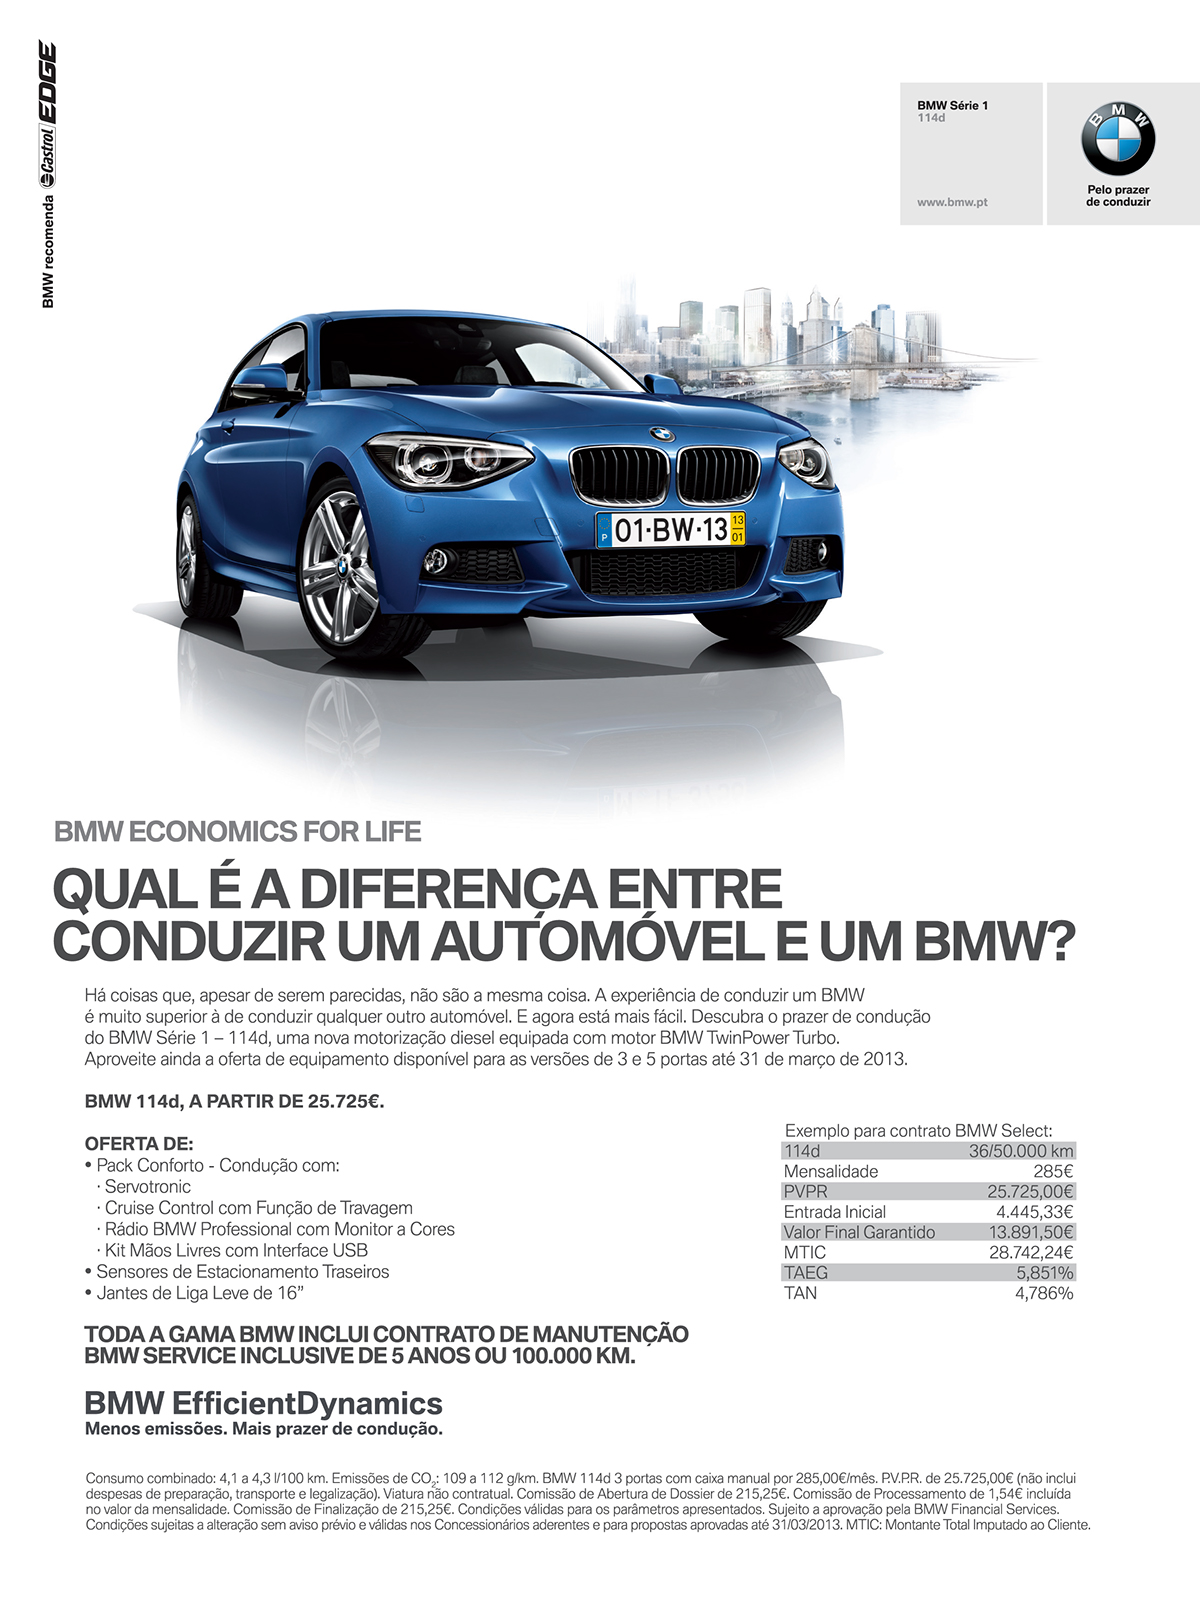 BMW economics for life